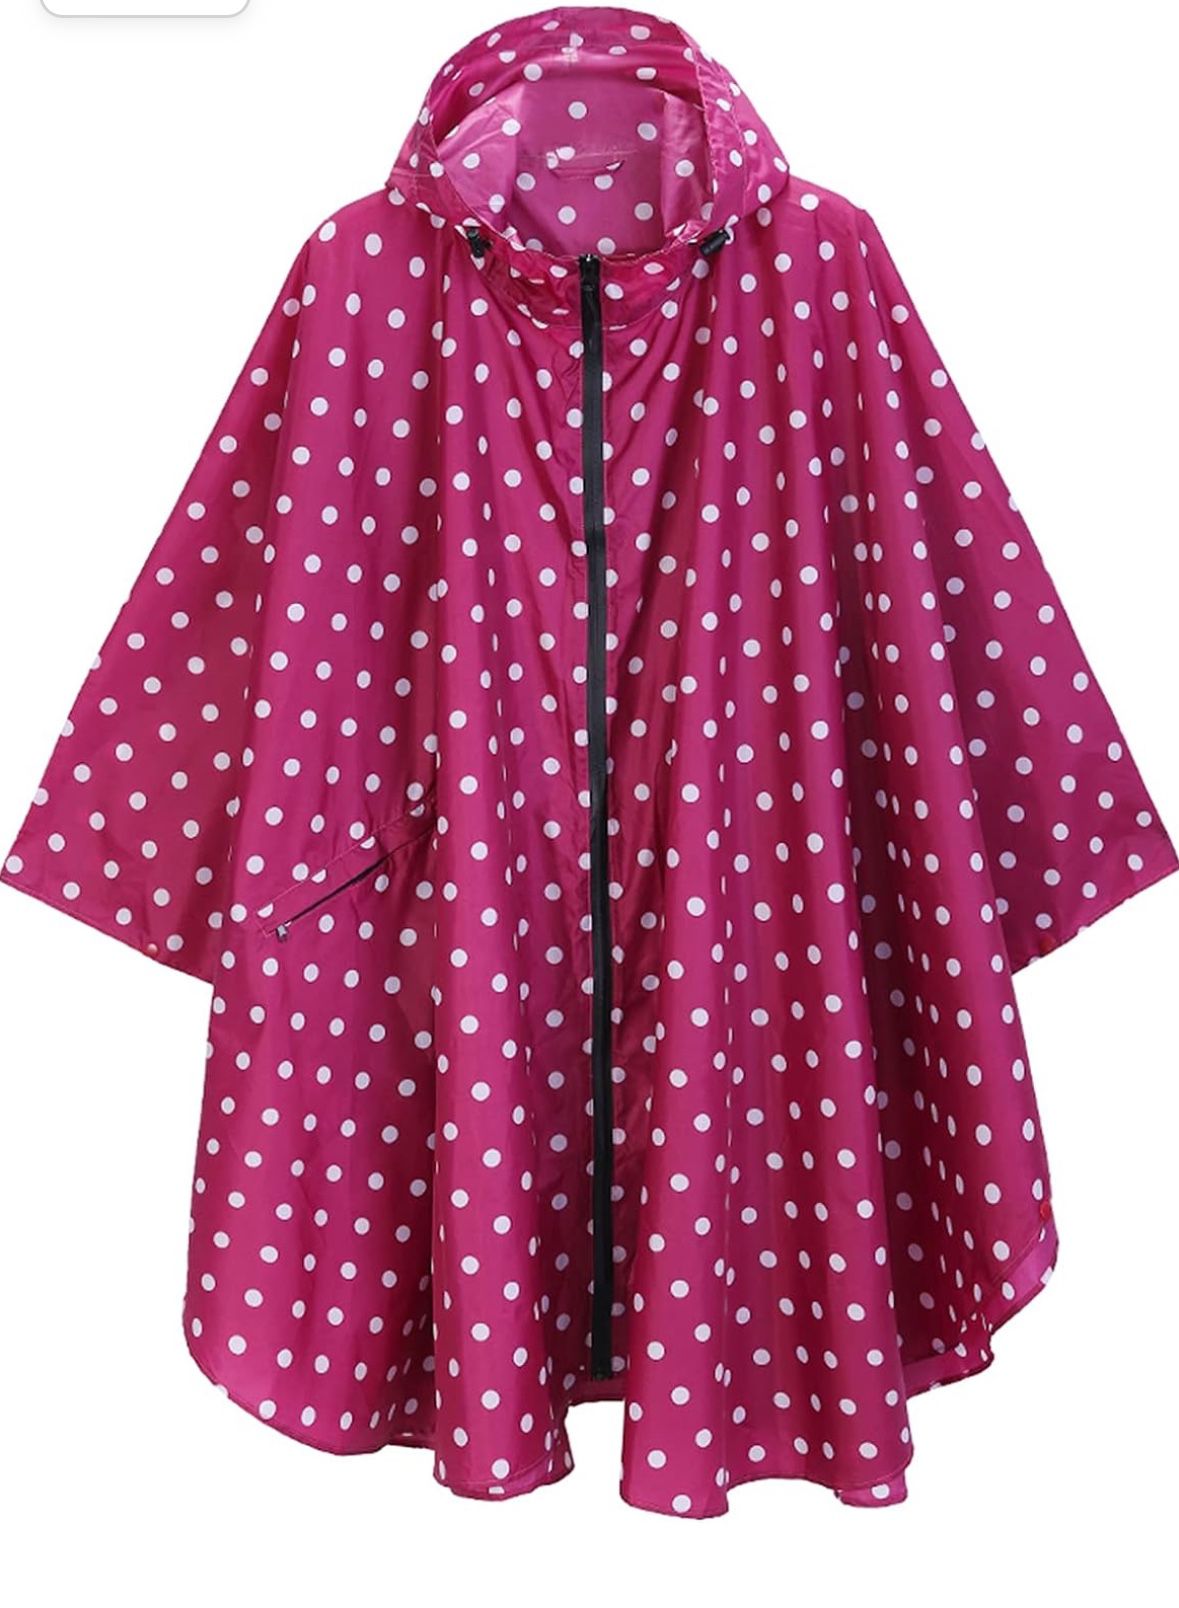 salamra Rain Poncho Jacket Coat Hooded Zipper Style for Women/Men/Adult with Pocket